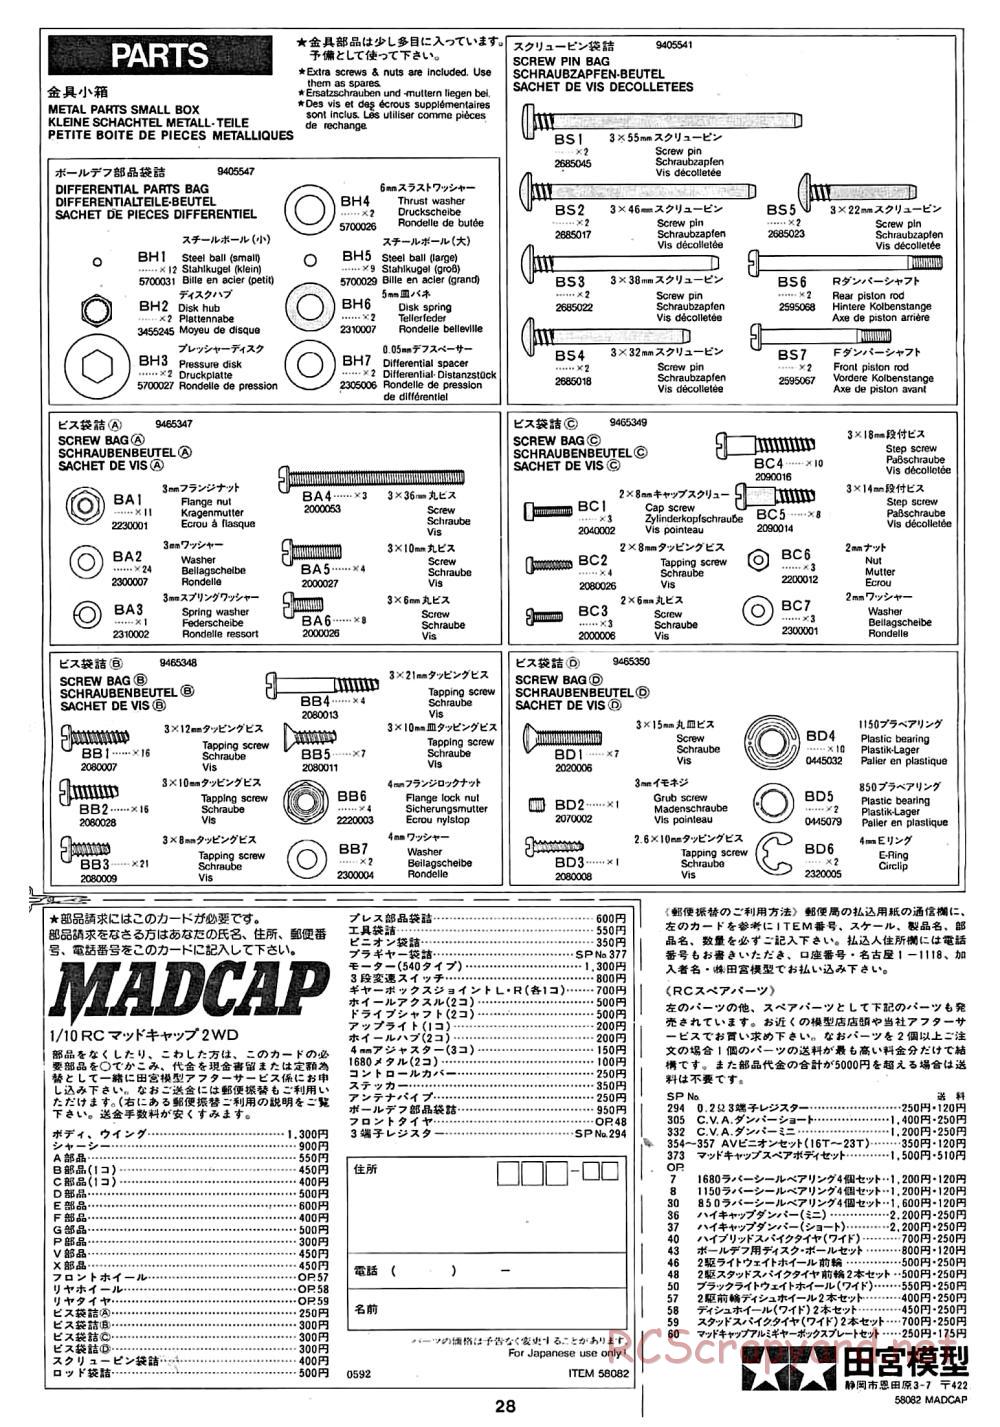 Tamiya - Madcap - 58082 - Manual - Page 28